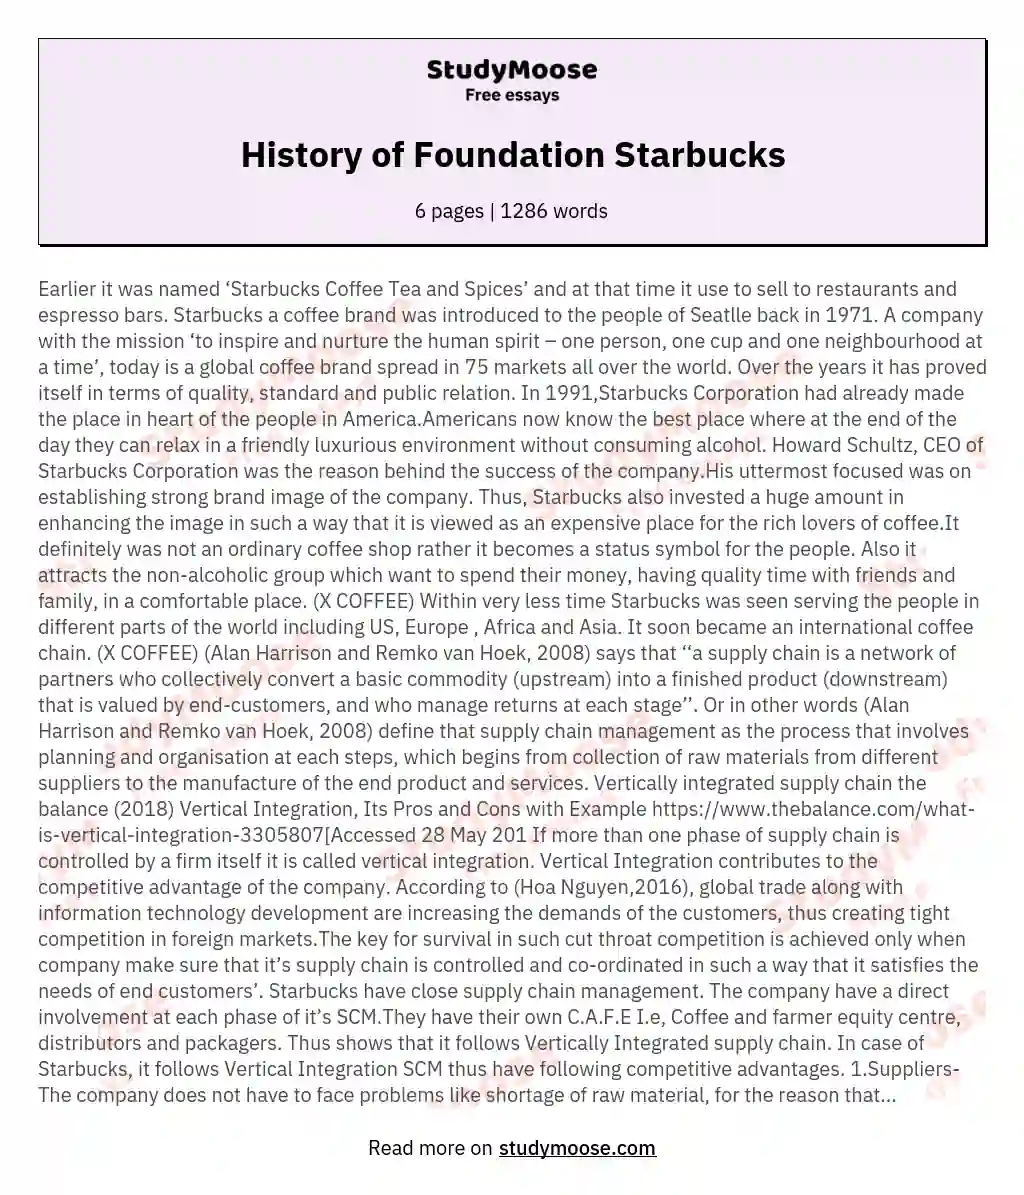 History of Foundation Starbucks